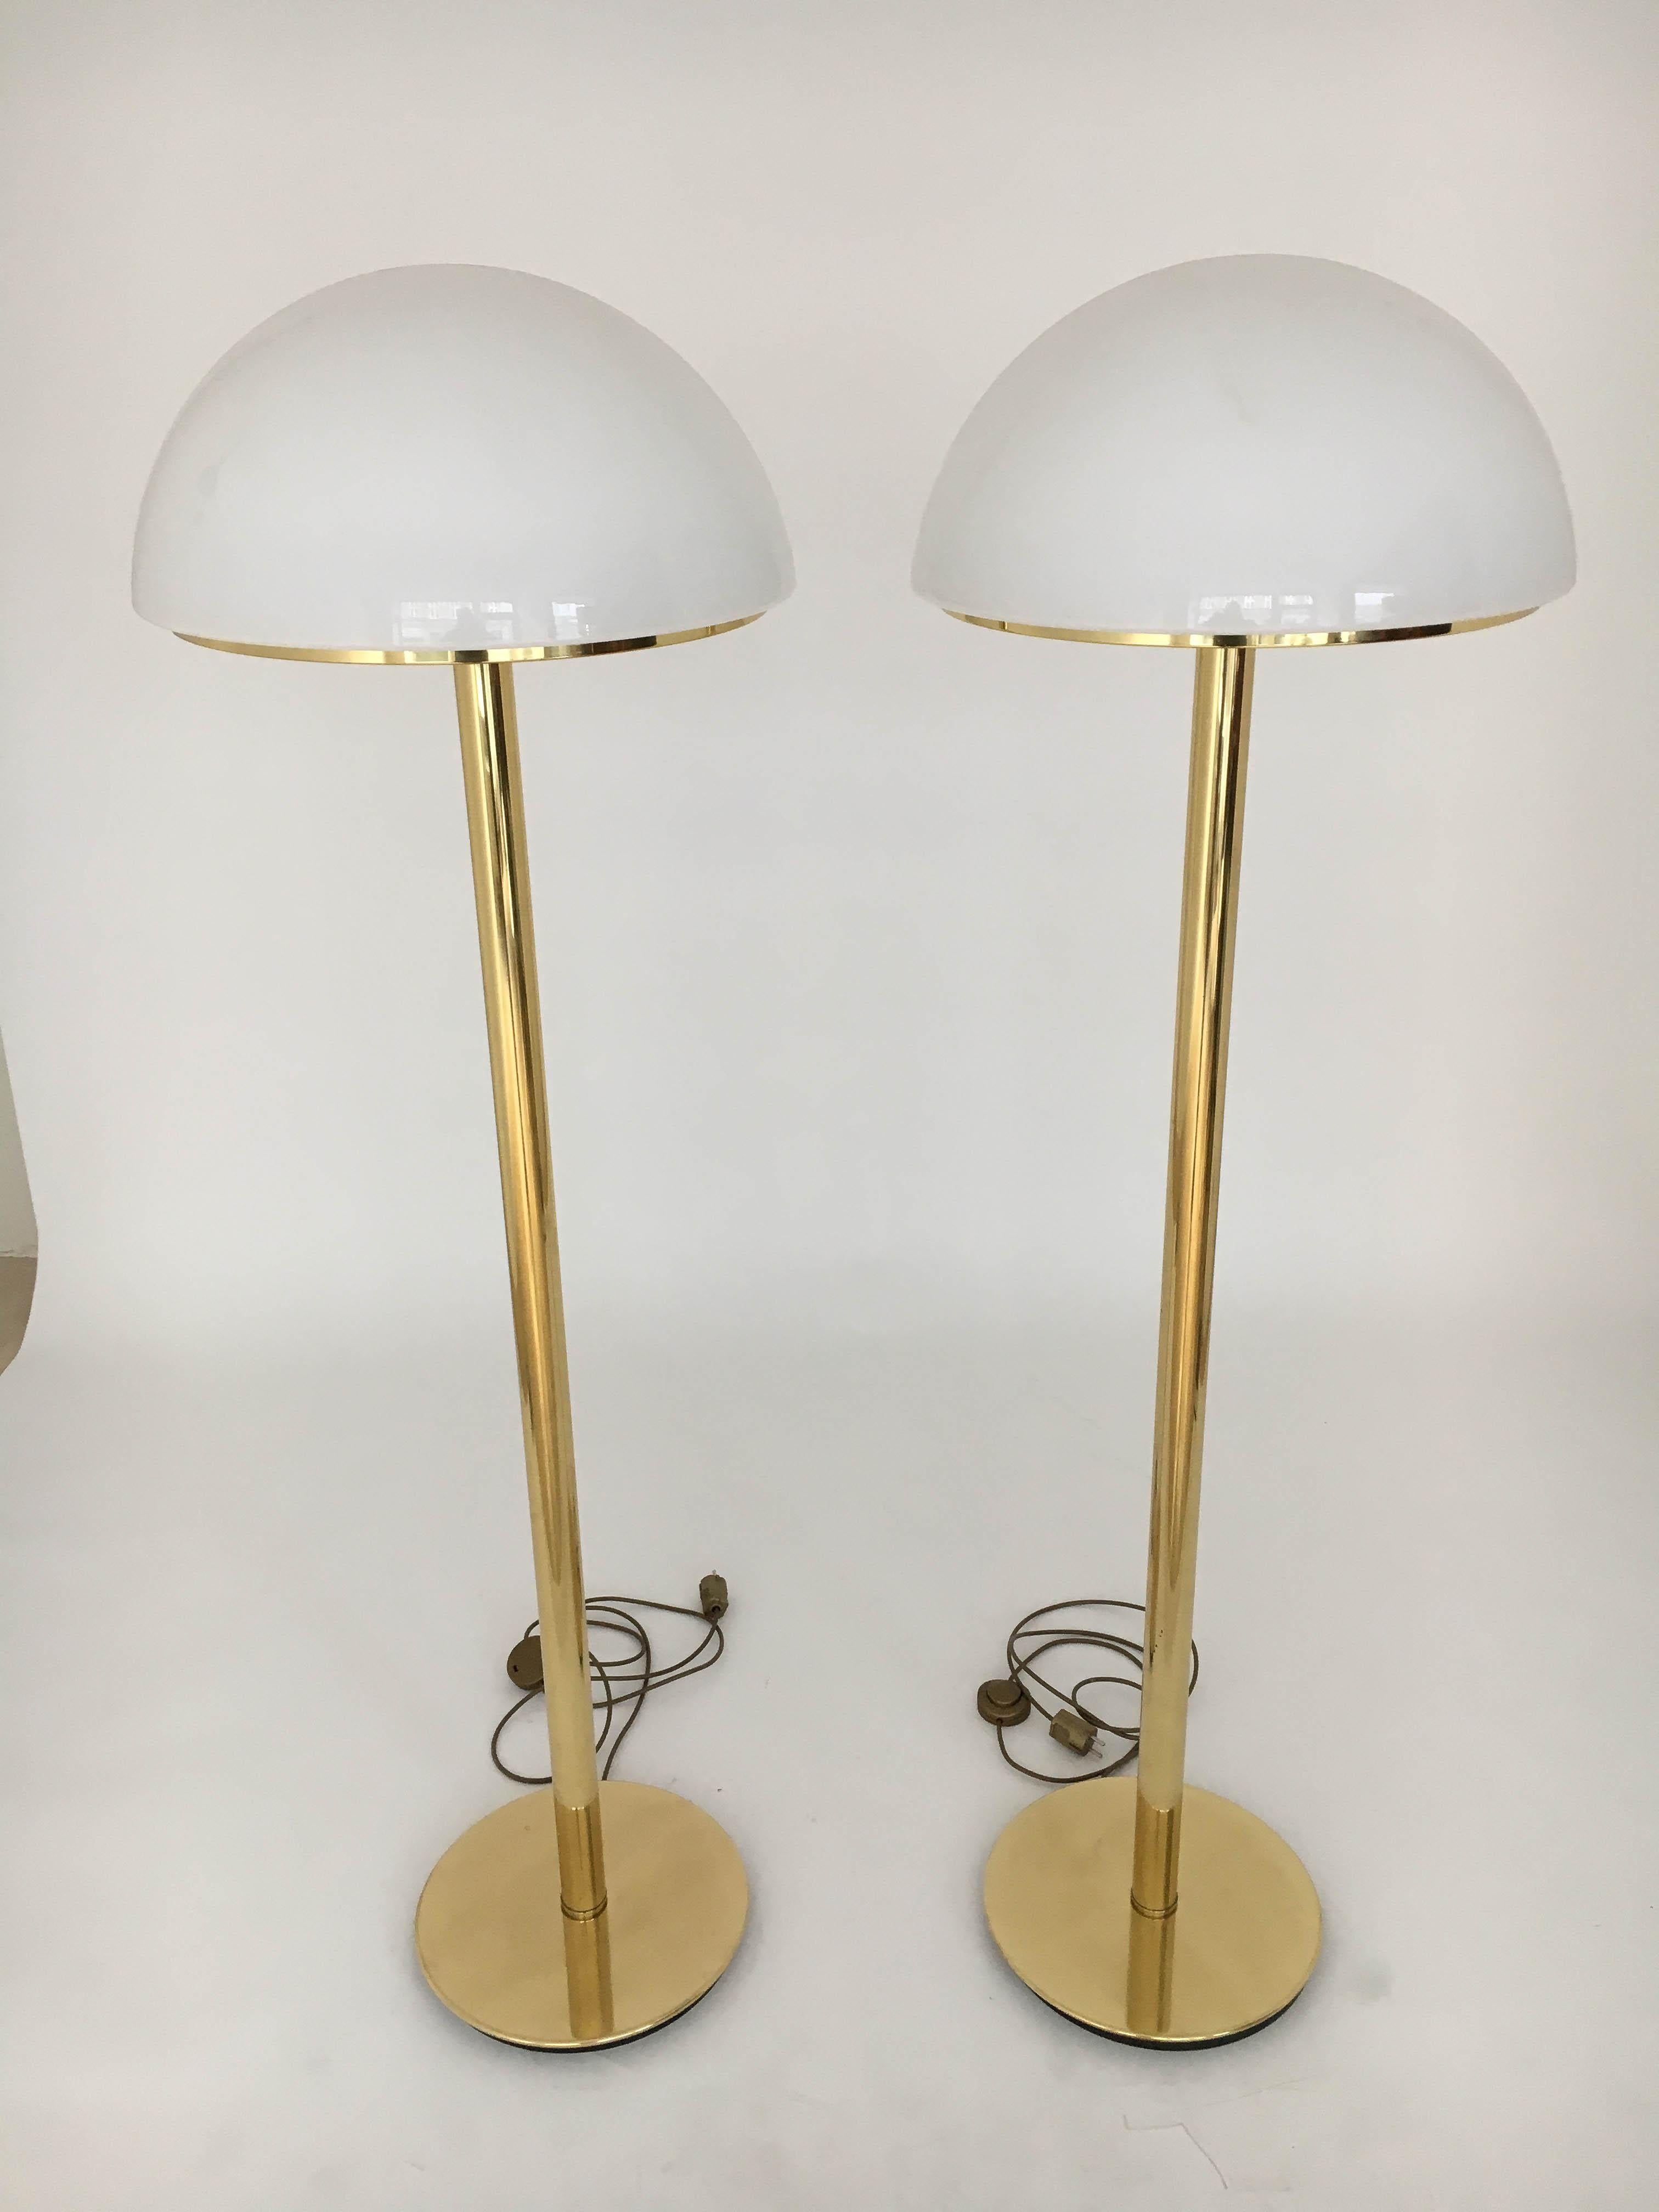 Metal Glashütte Limburg Mushroom Floor Lamps Set of Two, Germany, 1970s For Sale